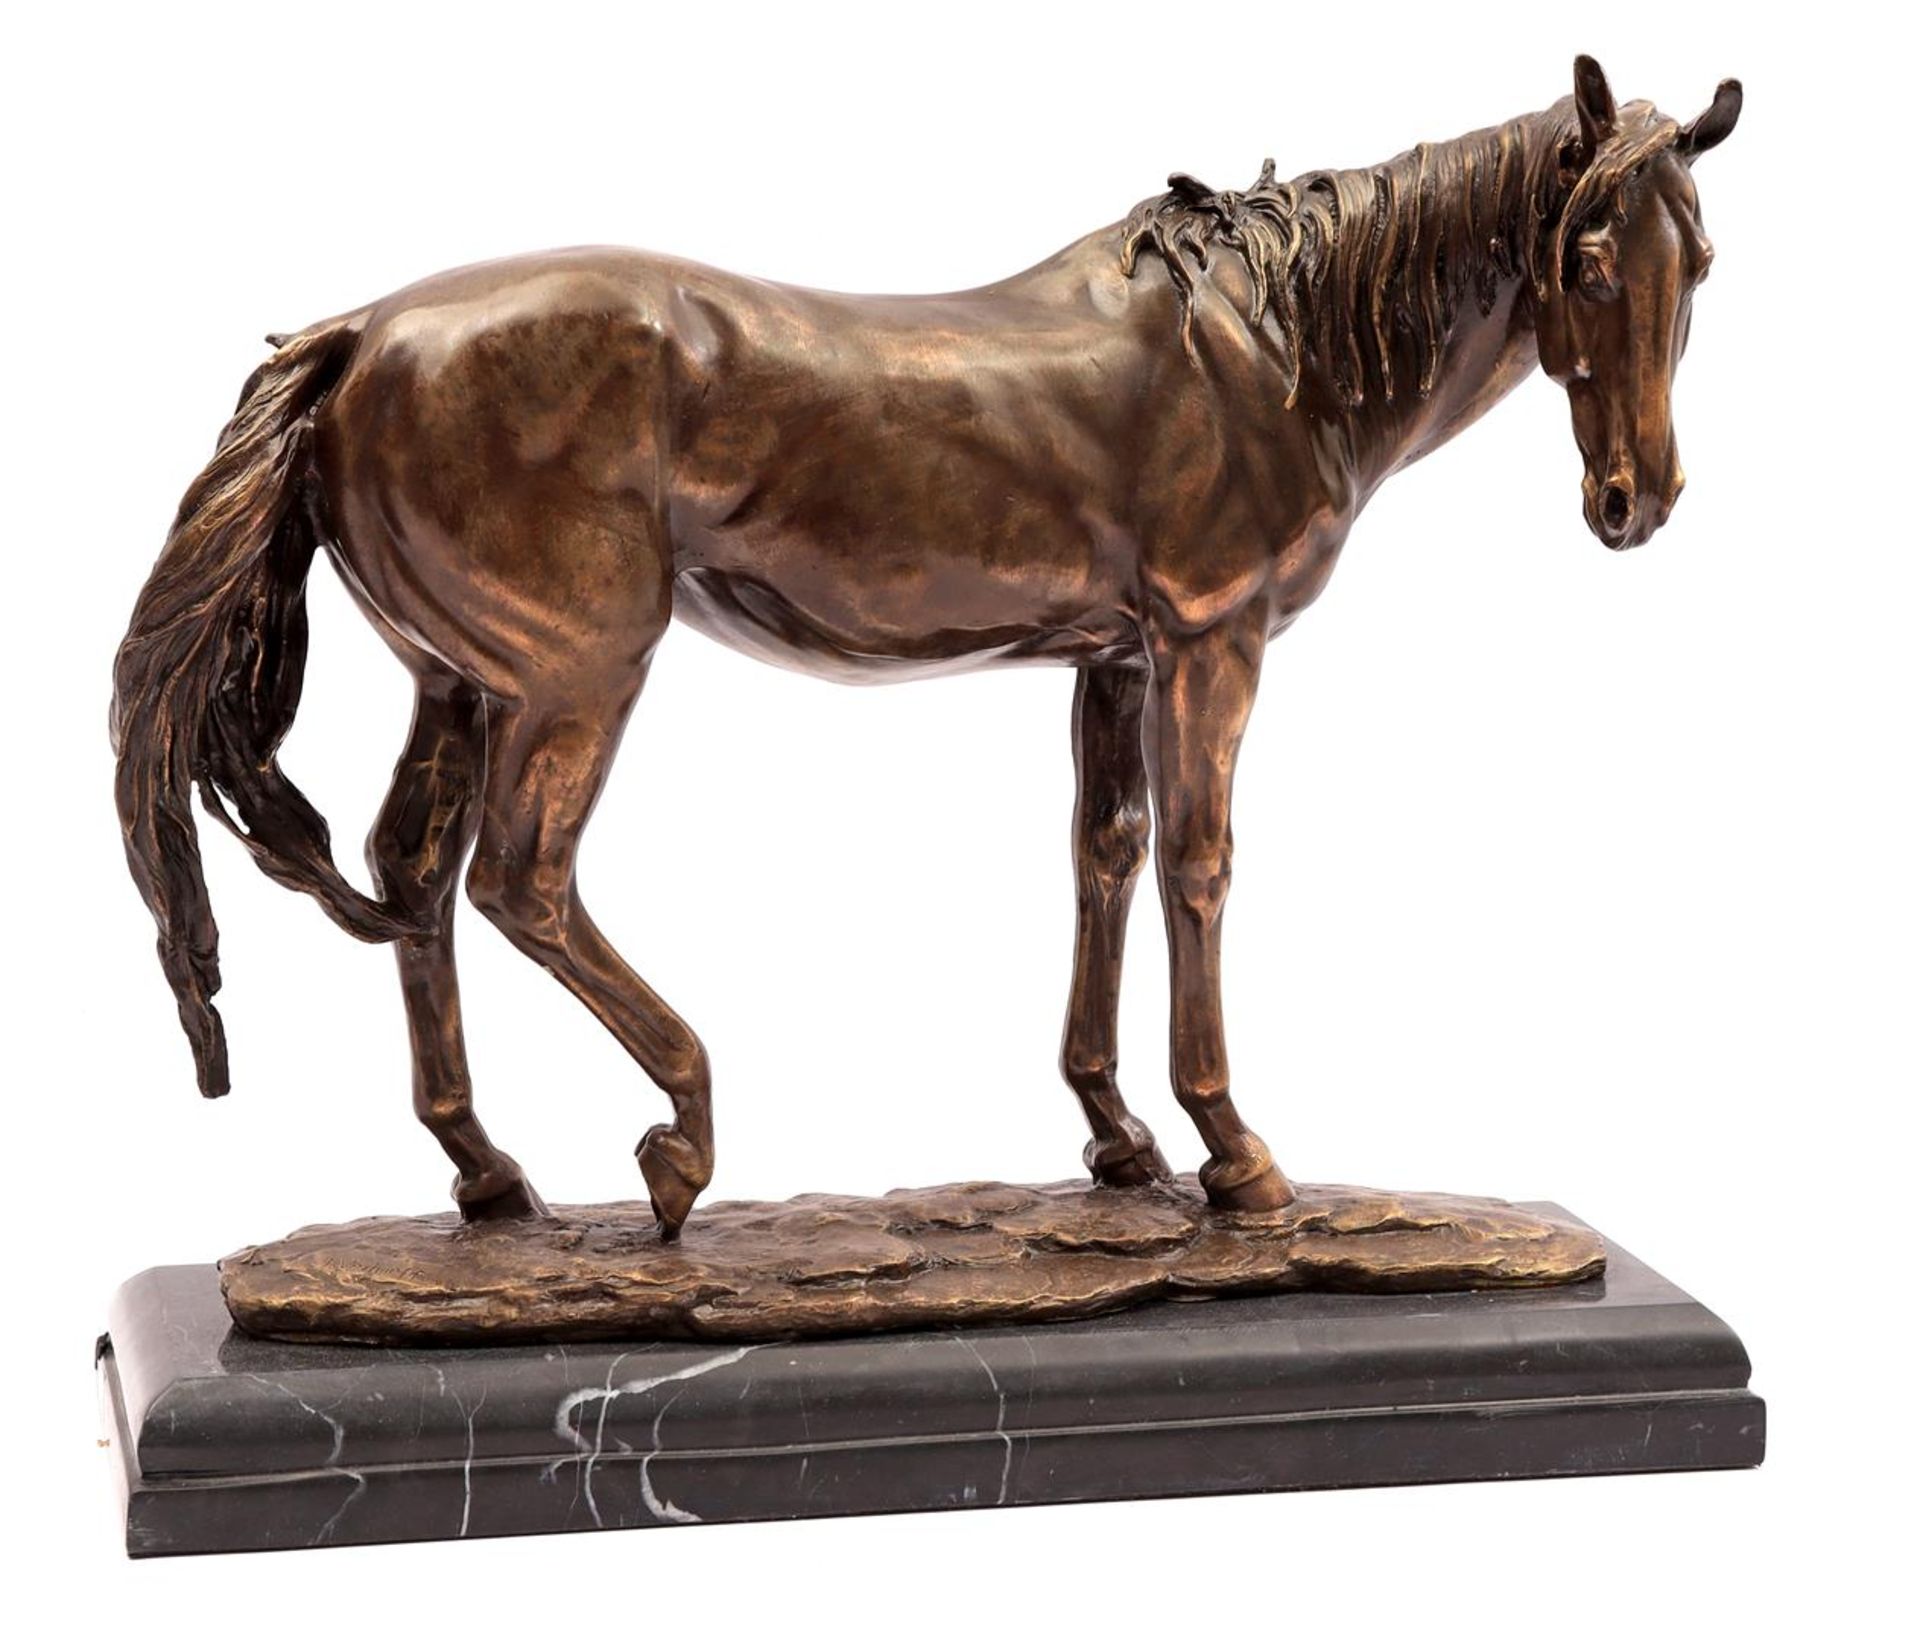 Decorative bronze statue of a horse